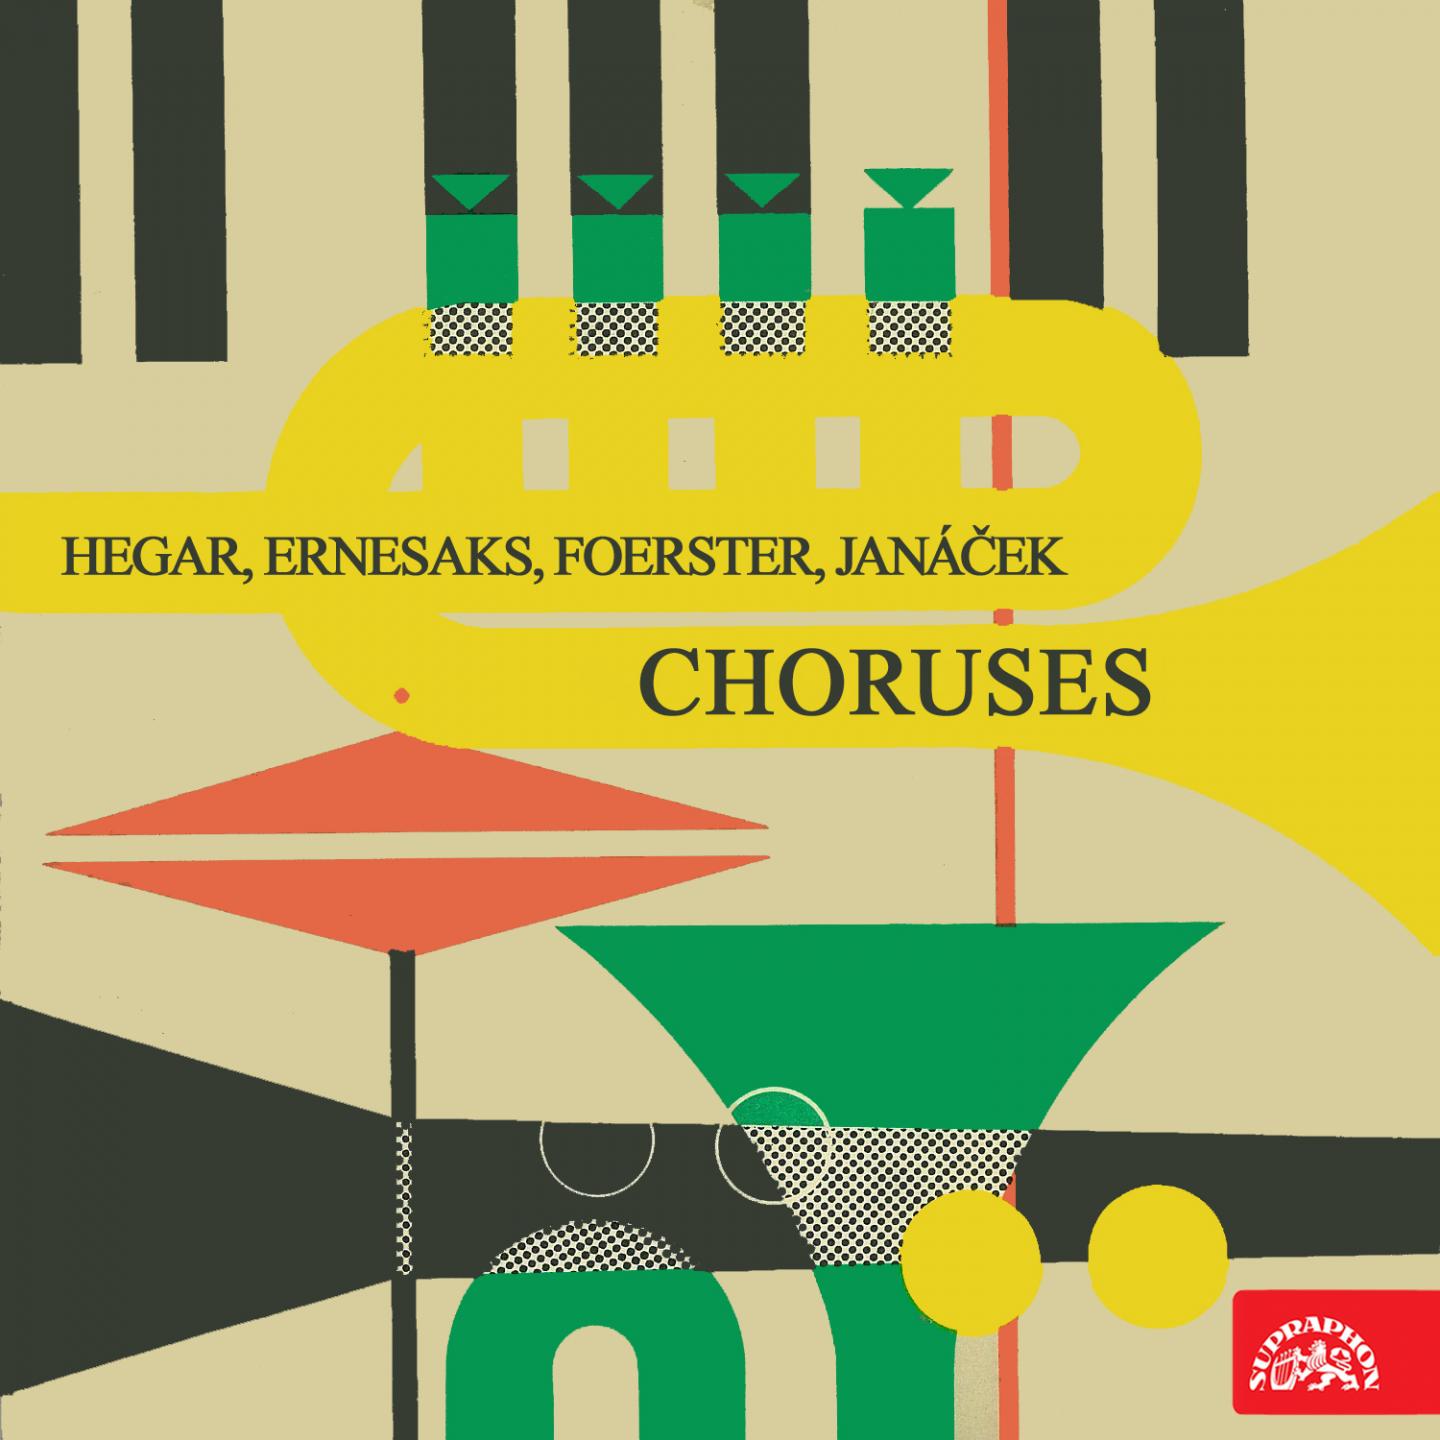 Foerster, Jana ek, Hegar, Ernesaks: Choruses